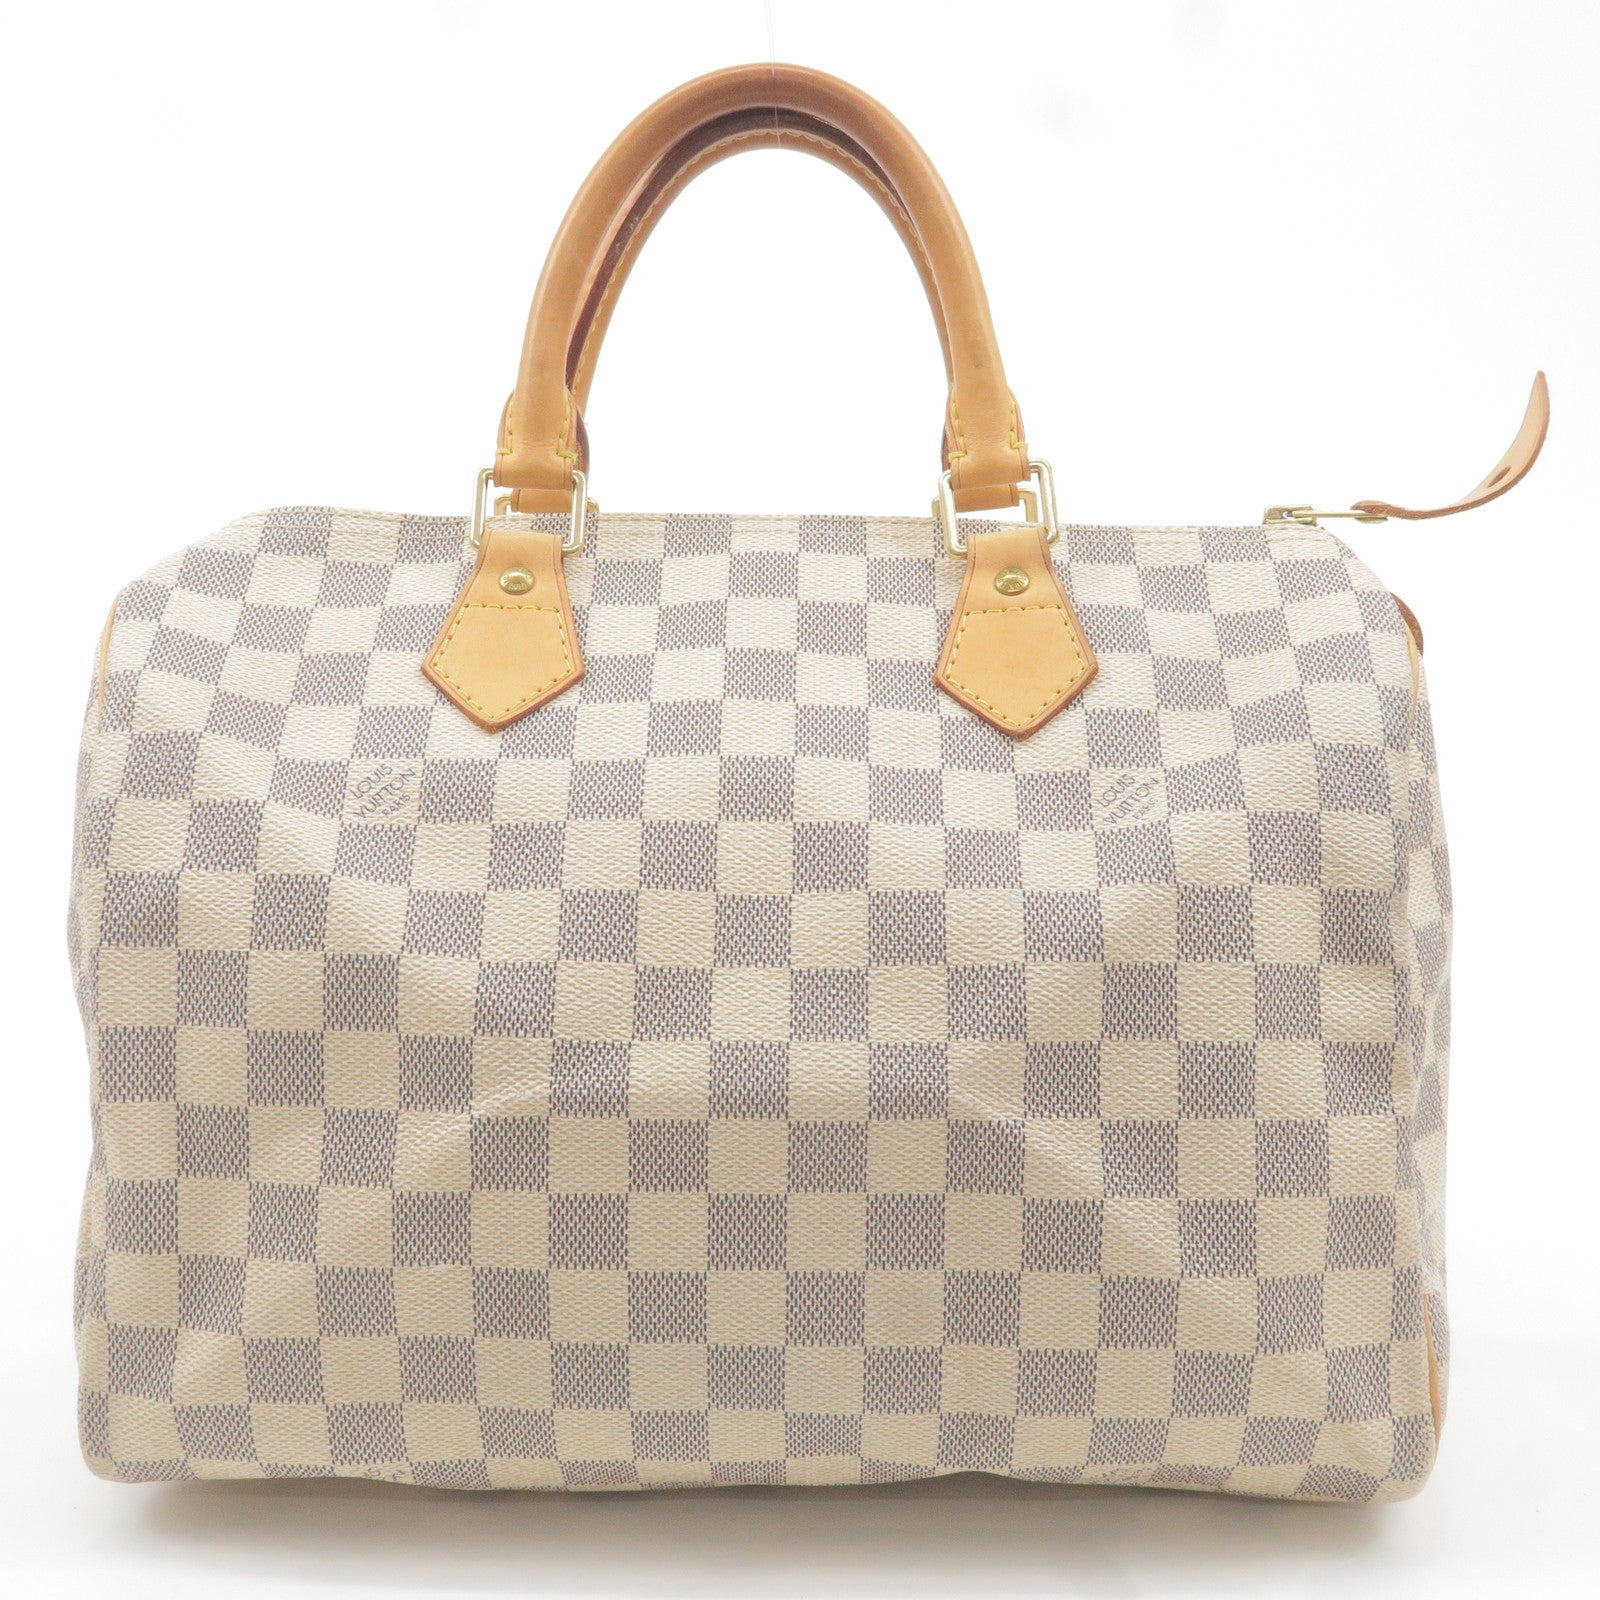 Authentic Louis Vuitton LV Hand Bag N41533 Speedy 30 White Damier Azur